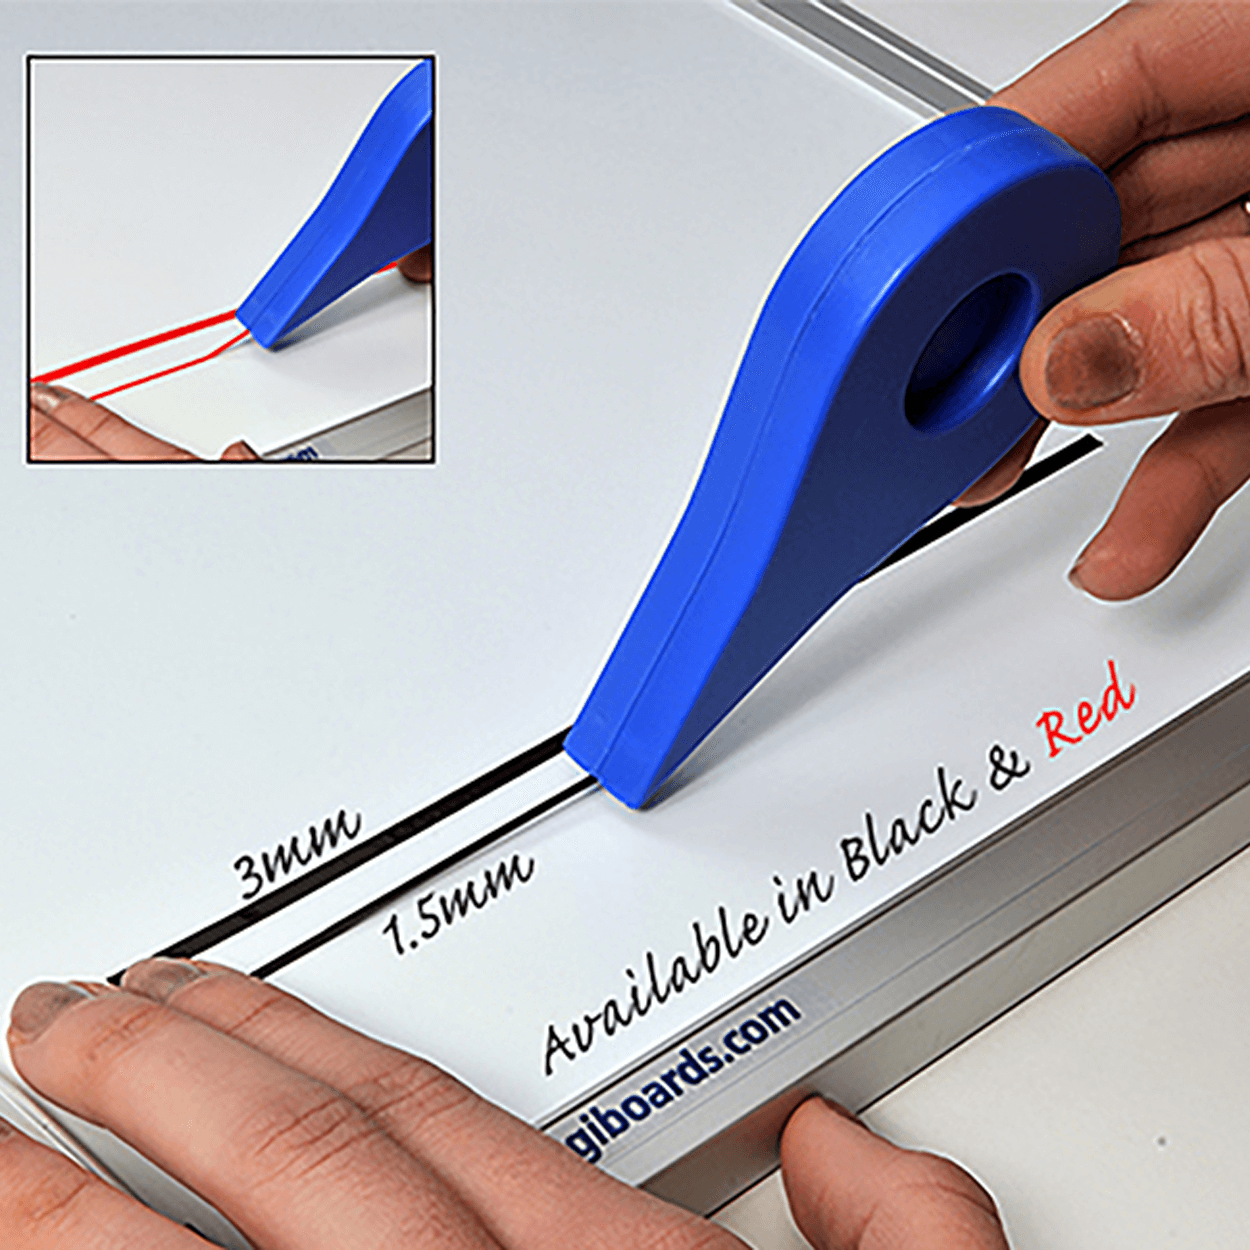 Whiteboard Tape,,thin Tape For Dry Erase Board, Whiteboard